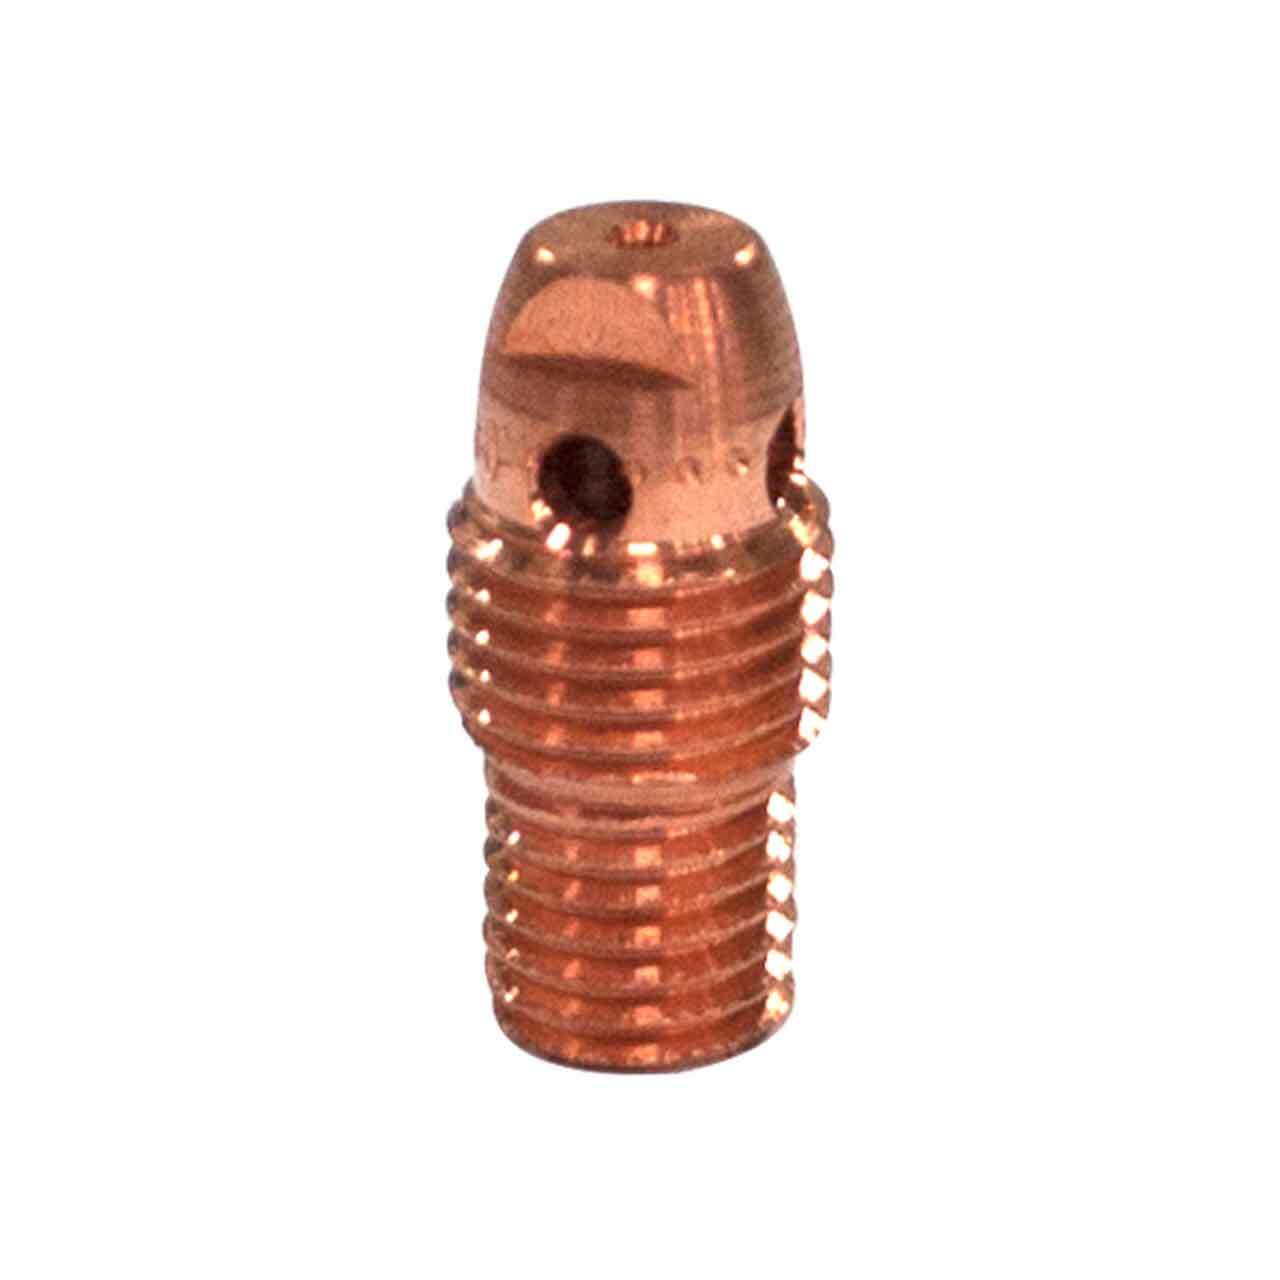 Weldmark by CK Worldwide 13N25 Copper Collet Body 2/100 (0.020) Max Electrode Diameter